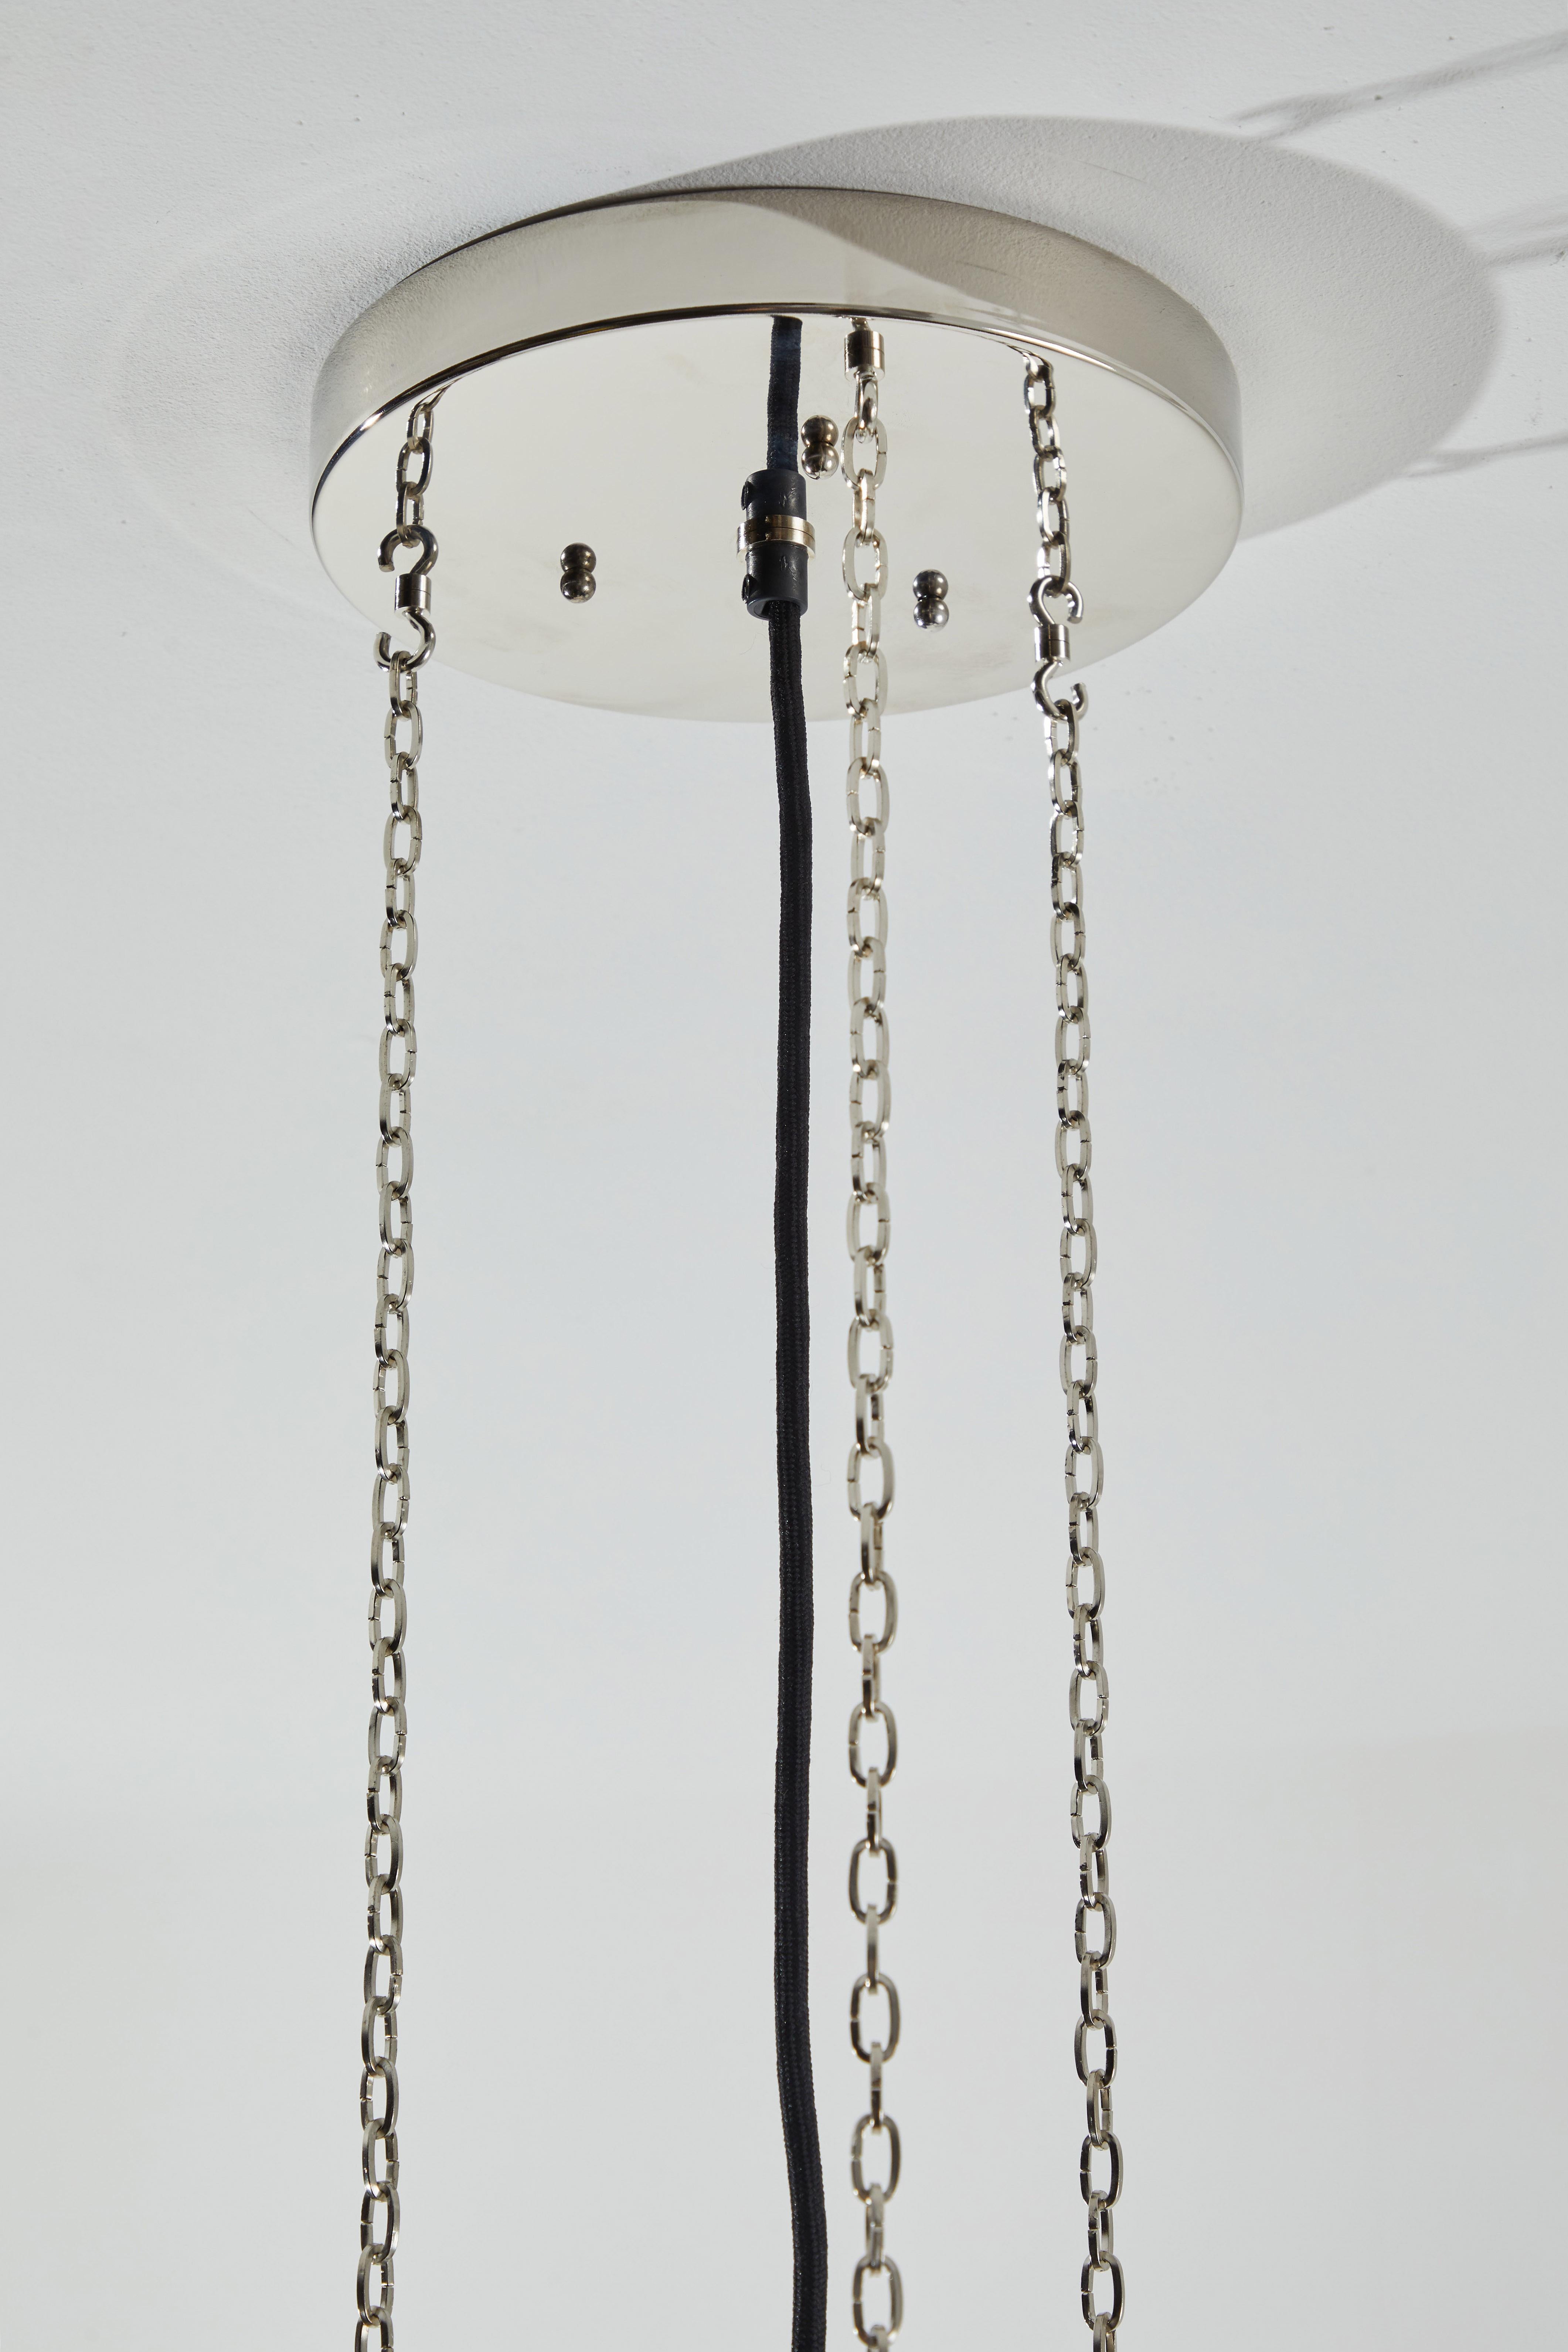 Model HMB 27/250 Bauhaus Suspension Light by Marianne Brandt For Sale 3